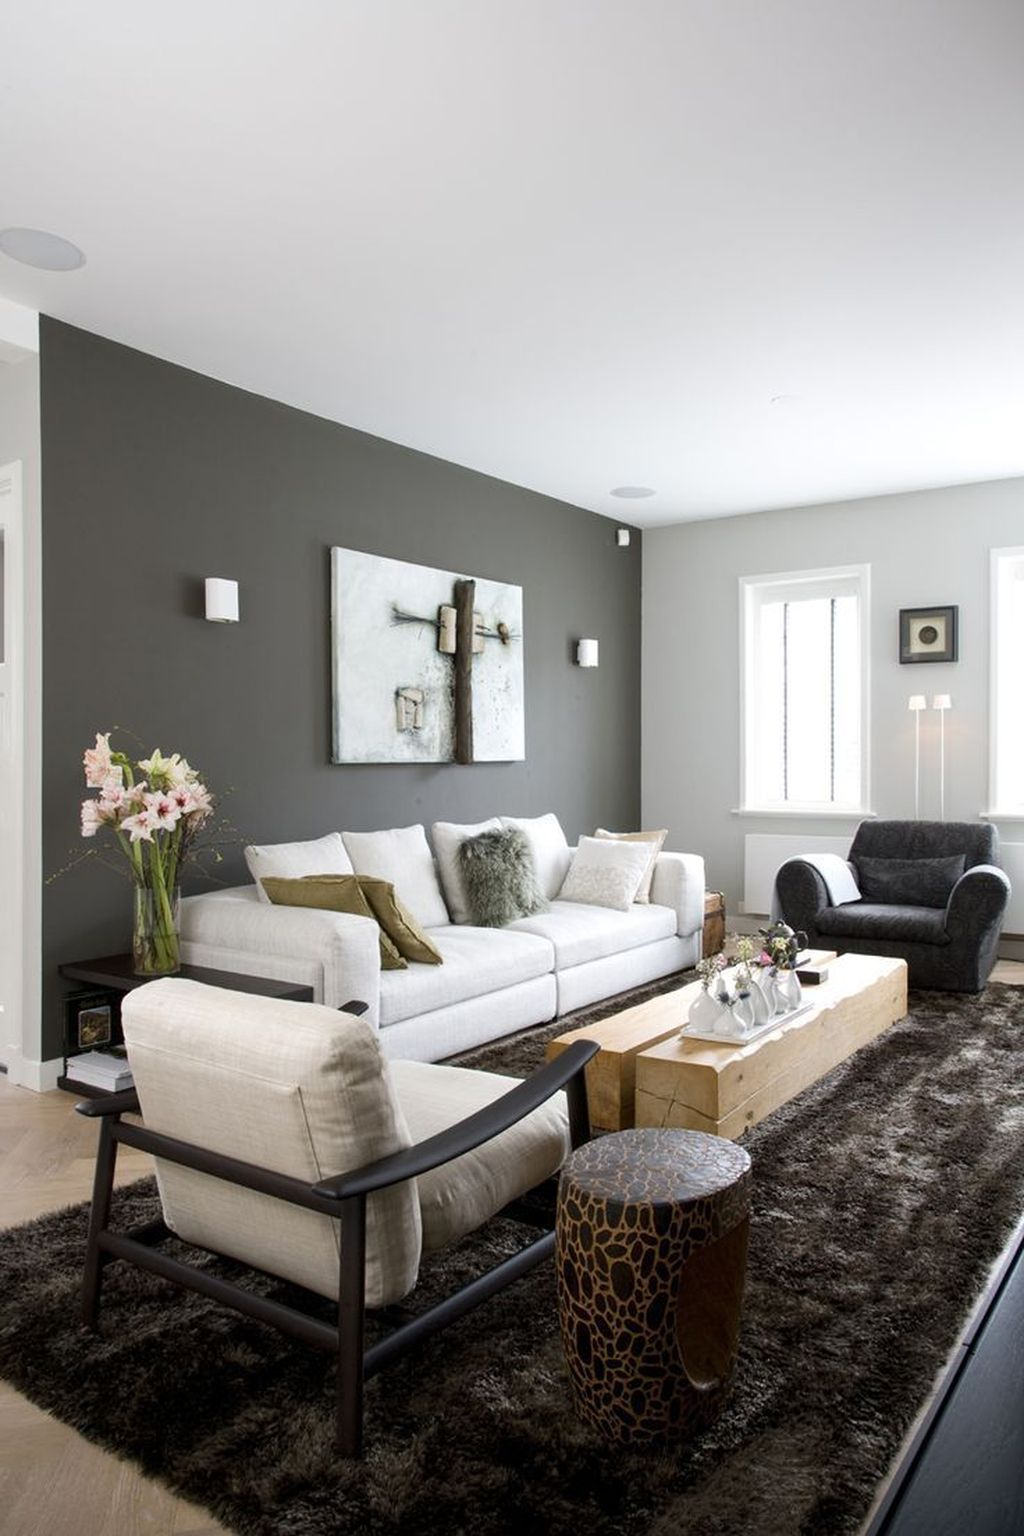 Excellent Furniture Design Ideas For Your Living Room 20